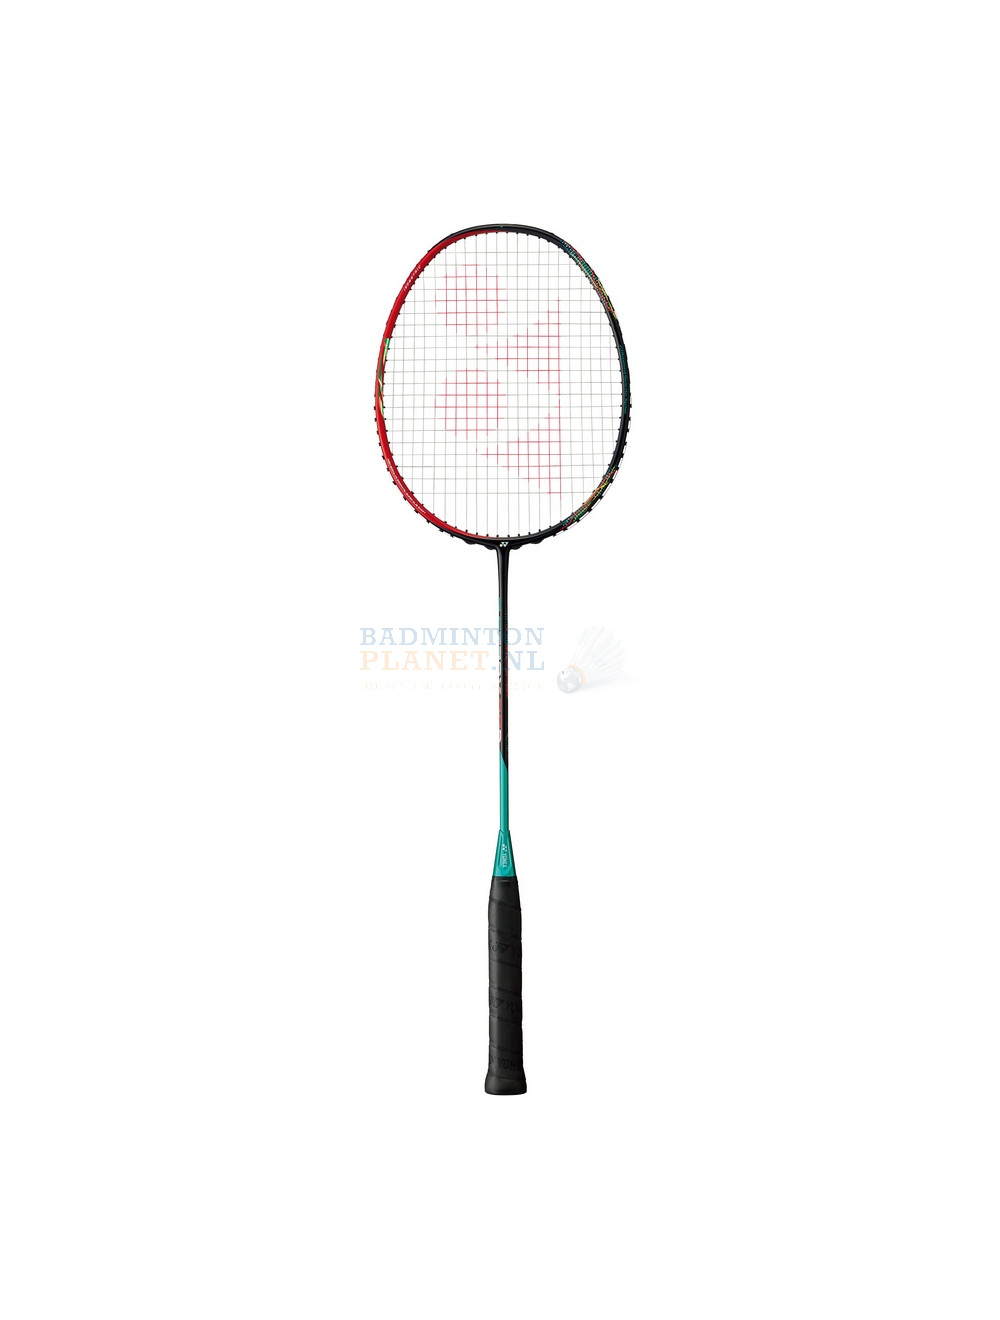 Yonex 88D Rood/Groen badmintonracket kopen? Badmintonplanet.nl